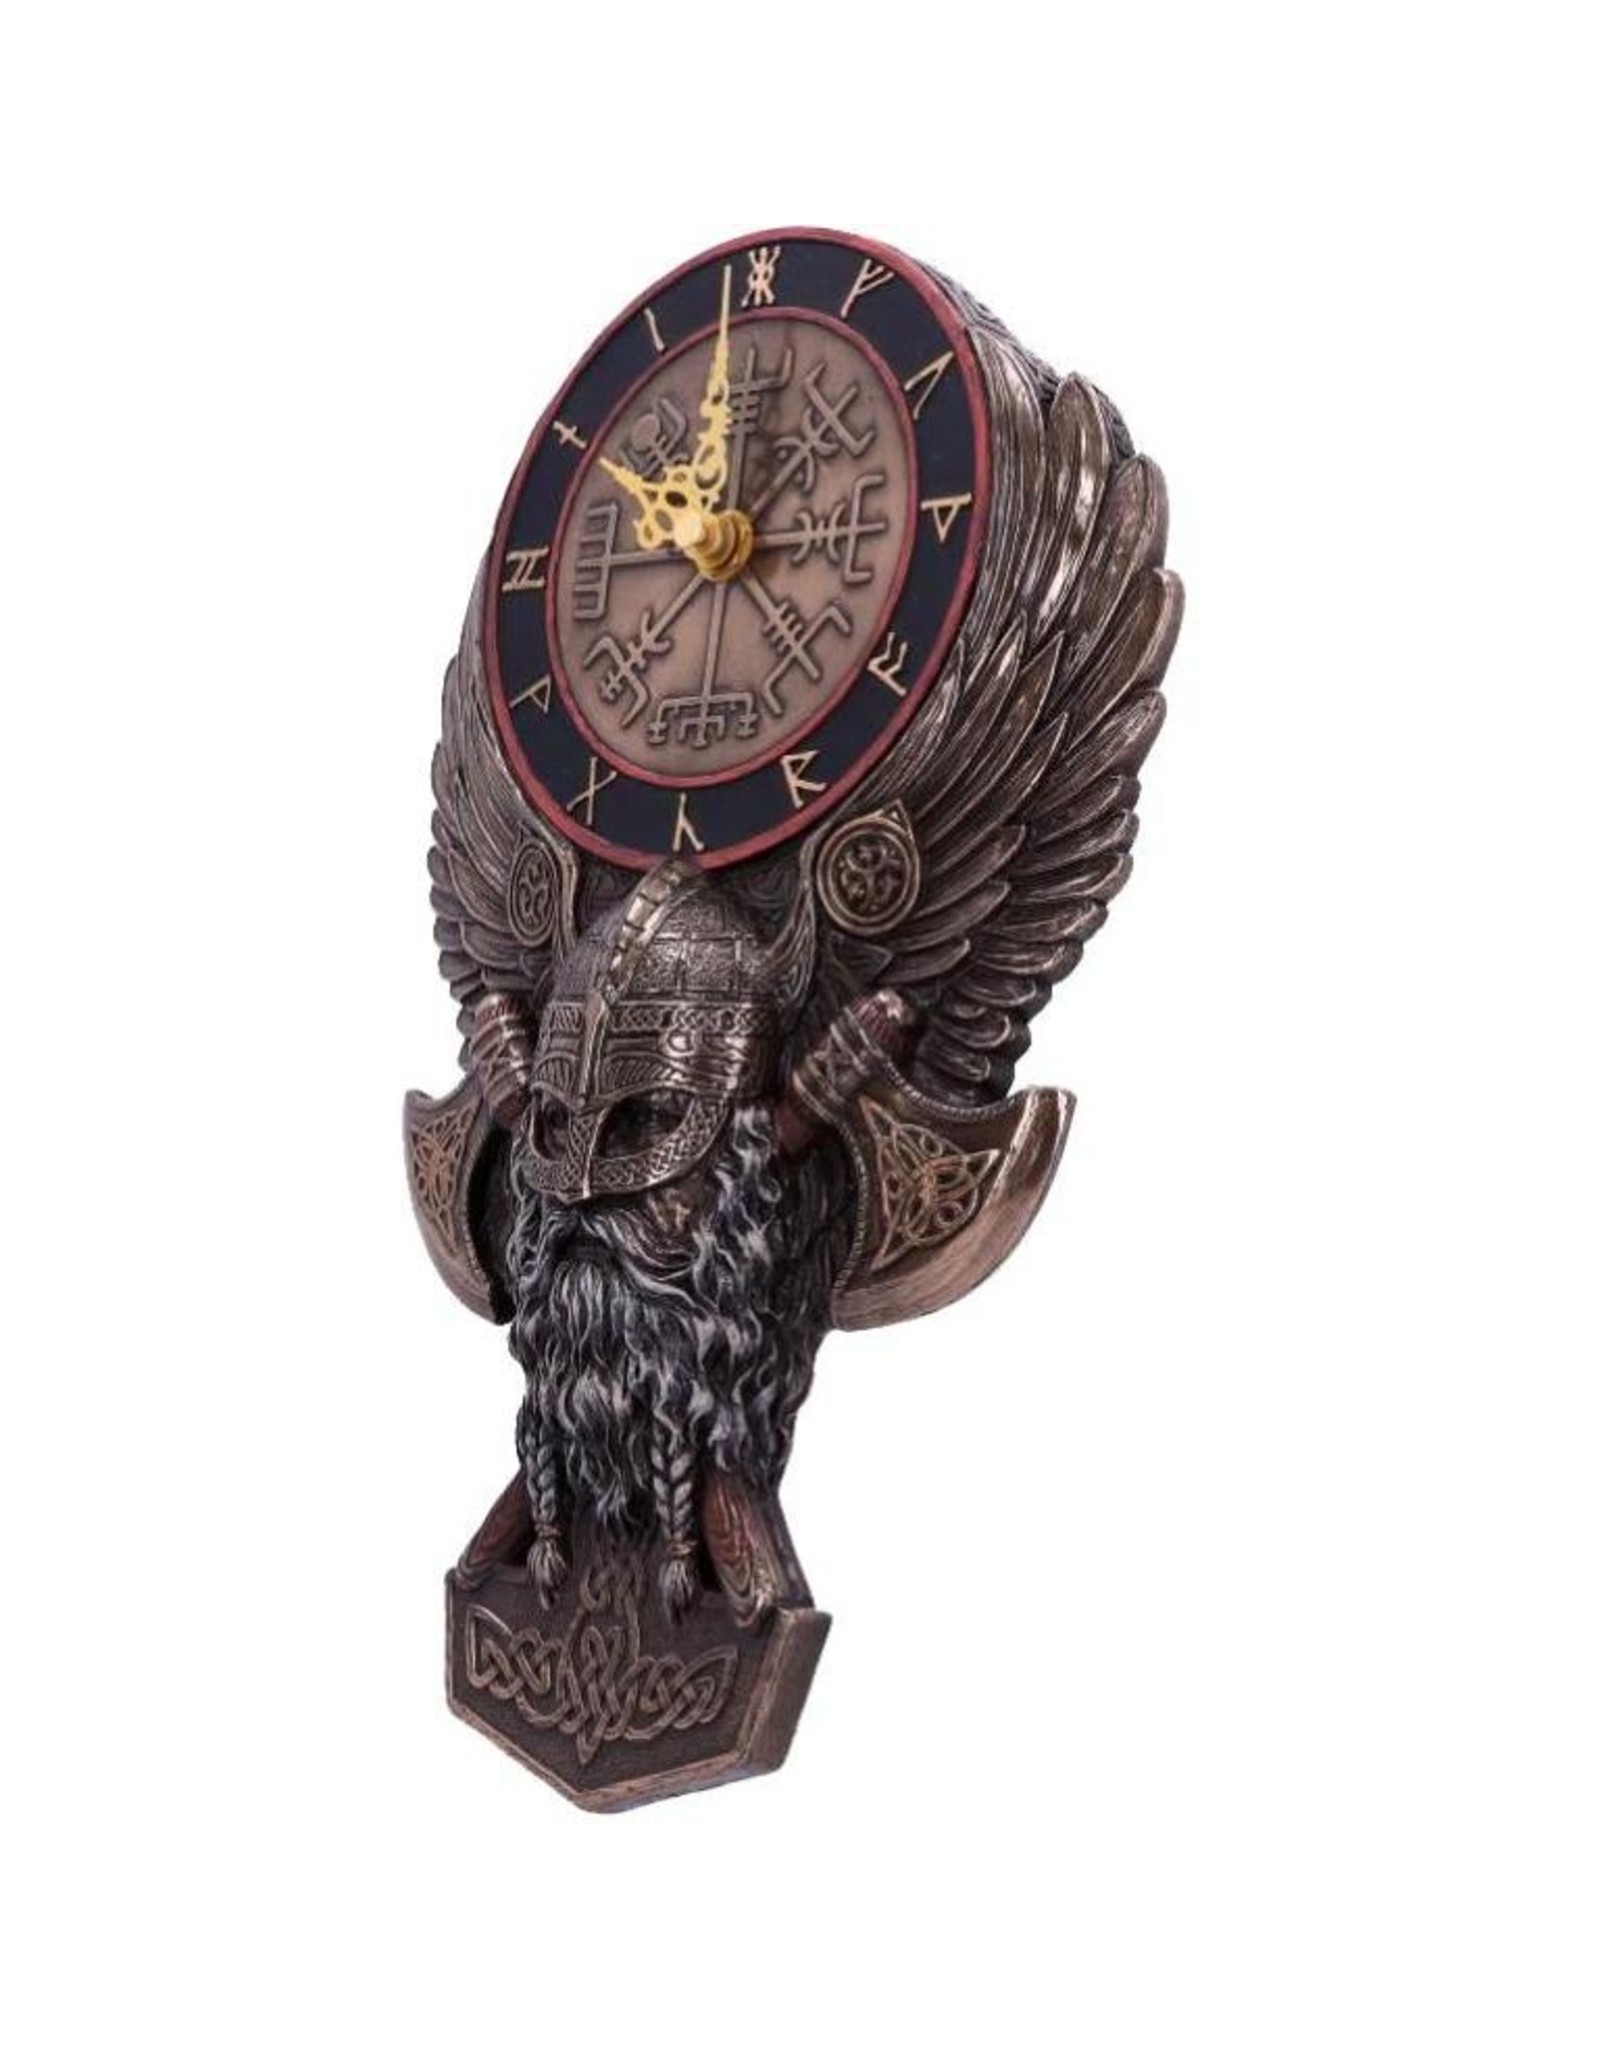 Veronese Design Giftware & Lifestyle - Viking Vegvisir Wall Clock - Bronzed